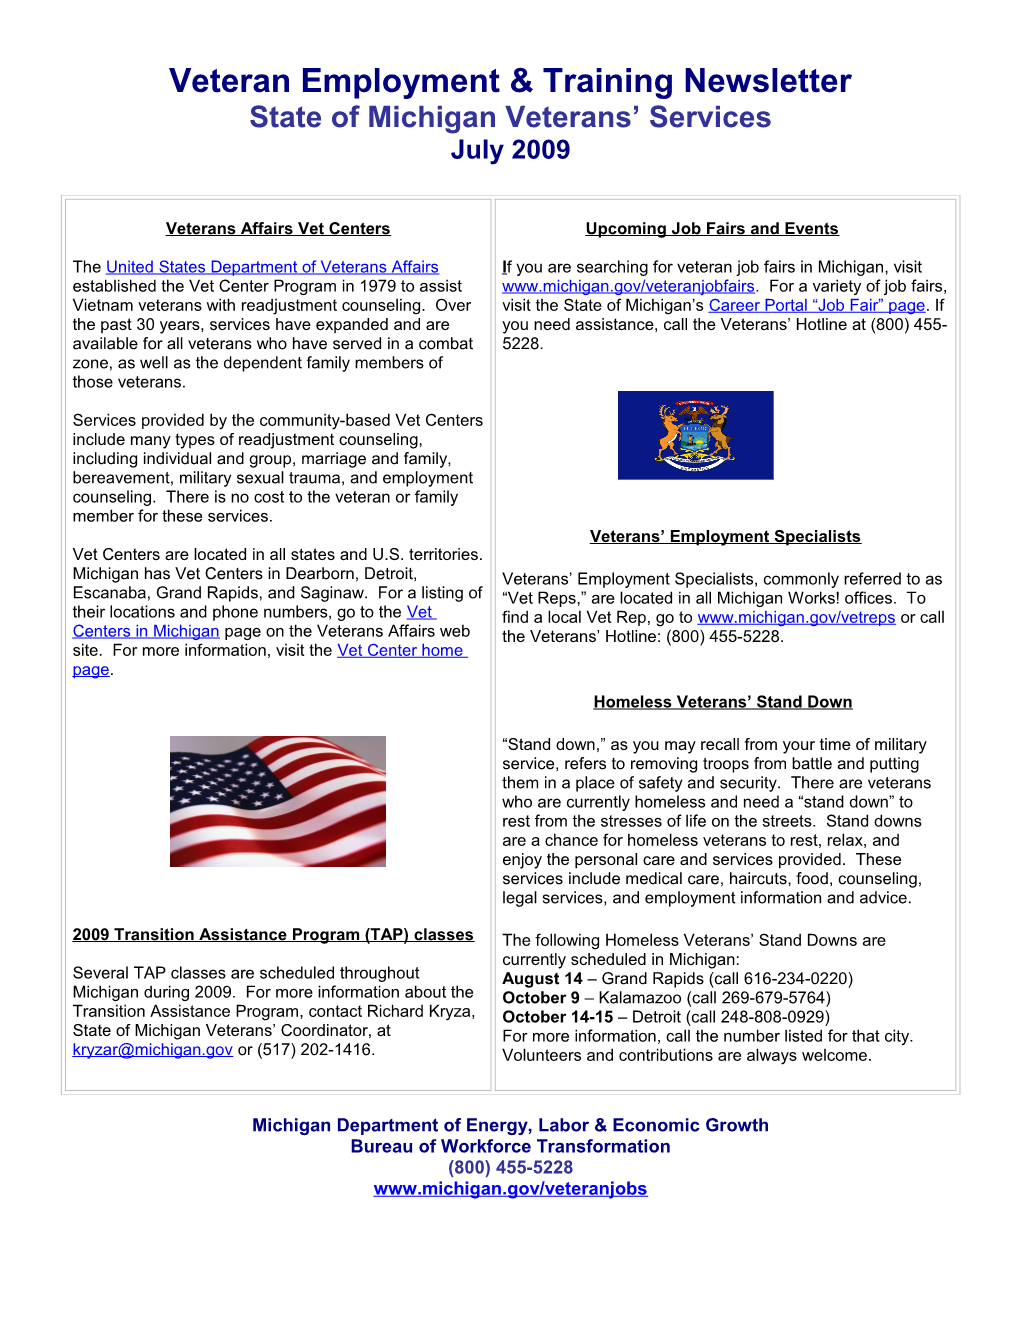 July 2009 Veteran Employment & Training News